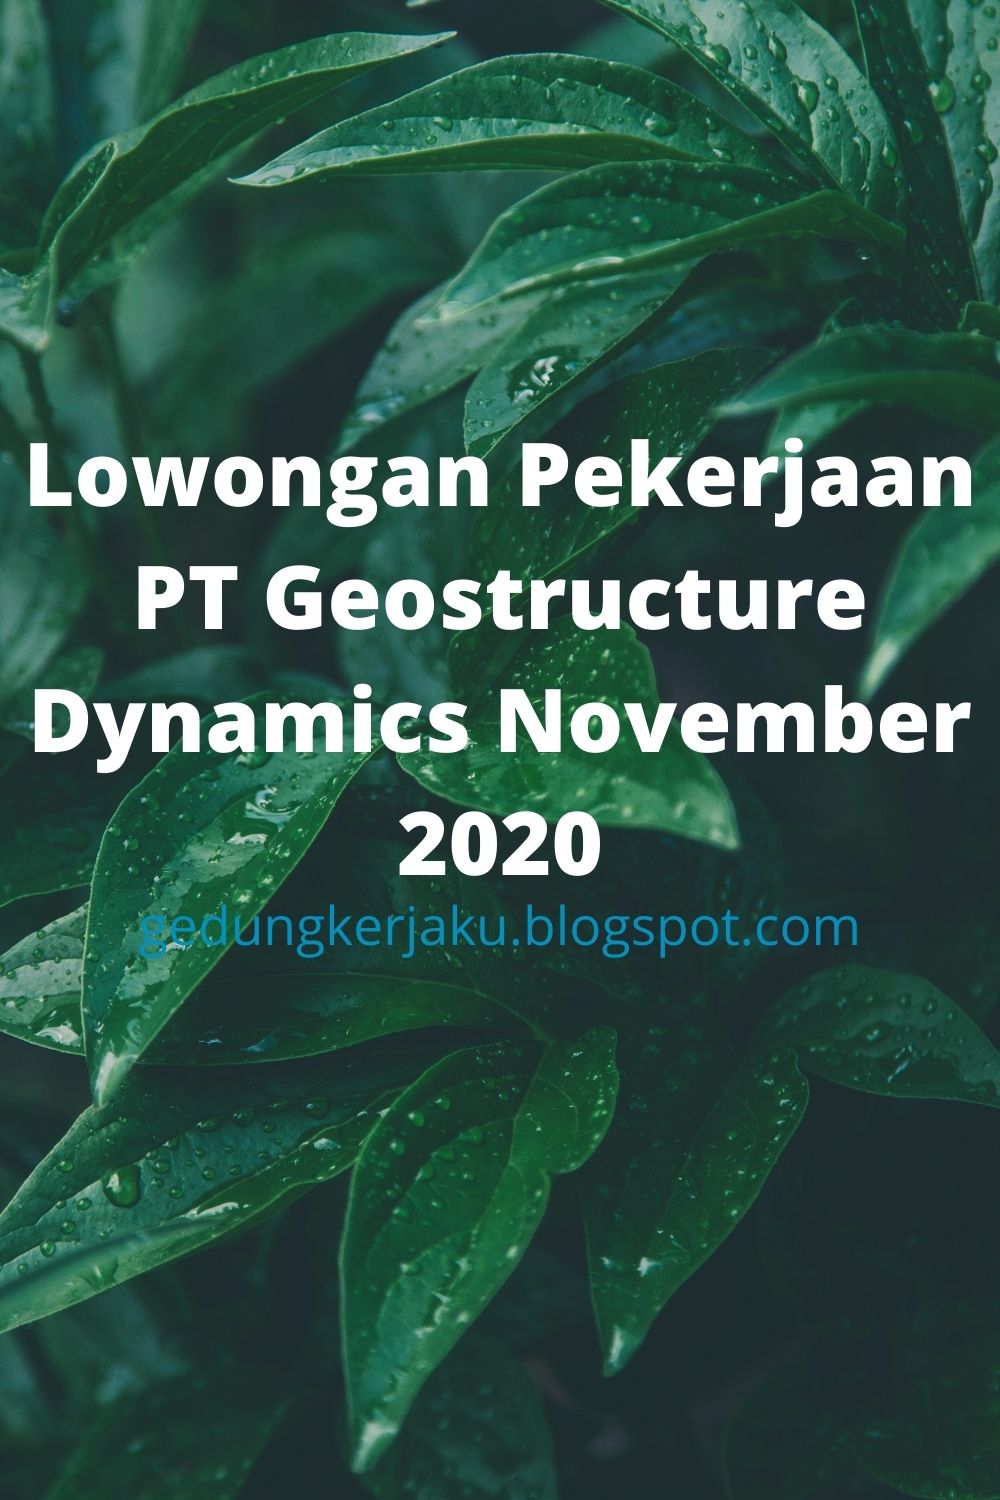 Lowongan Pekerjaan PT Geostructure Dynamics November 2020